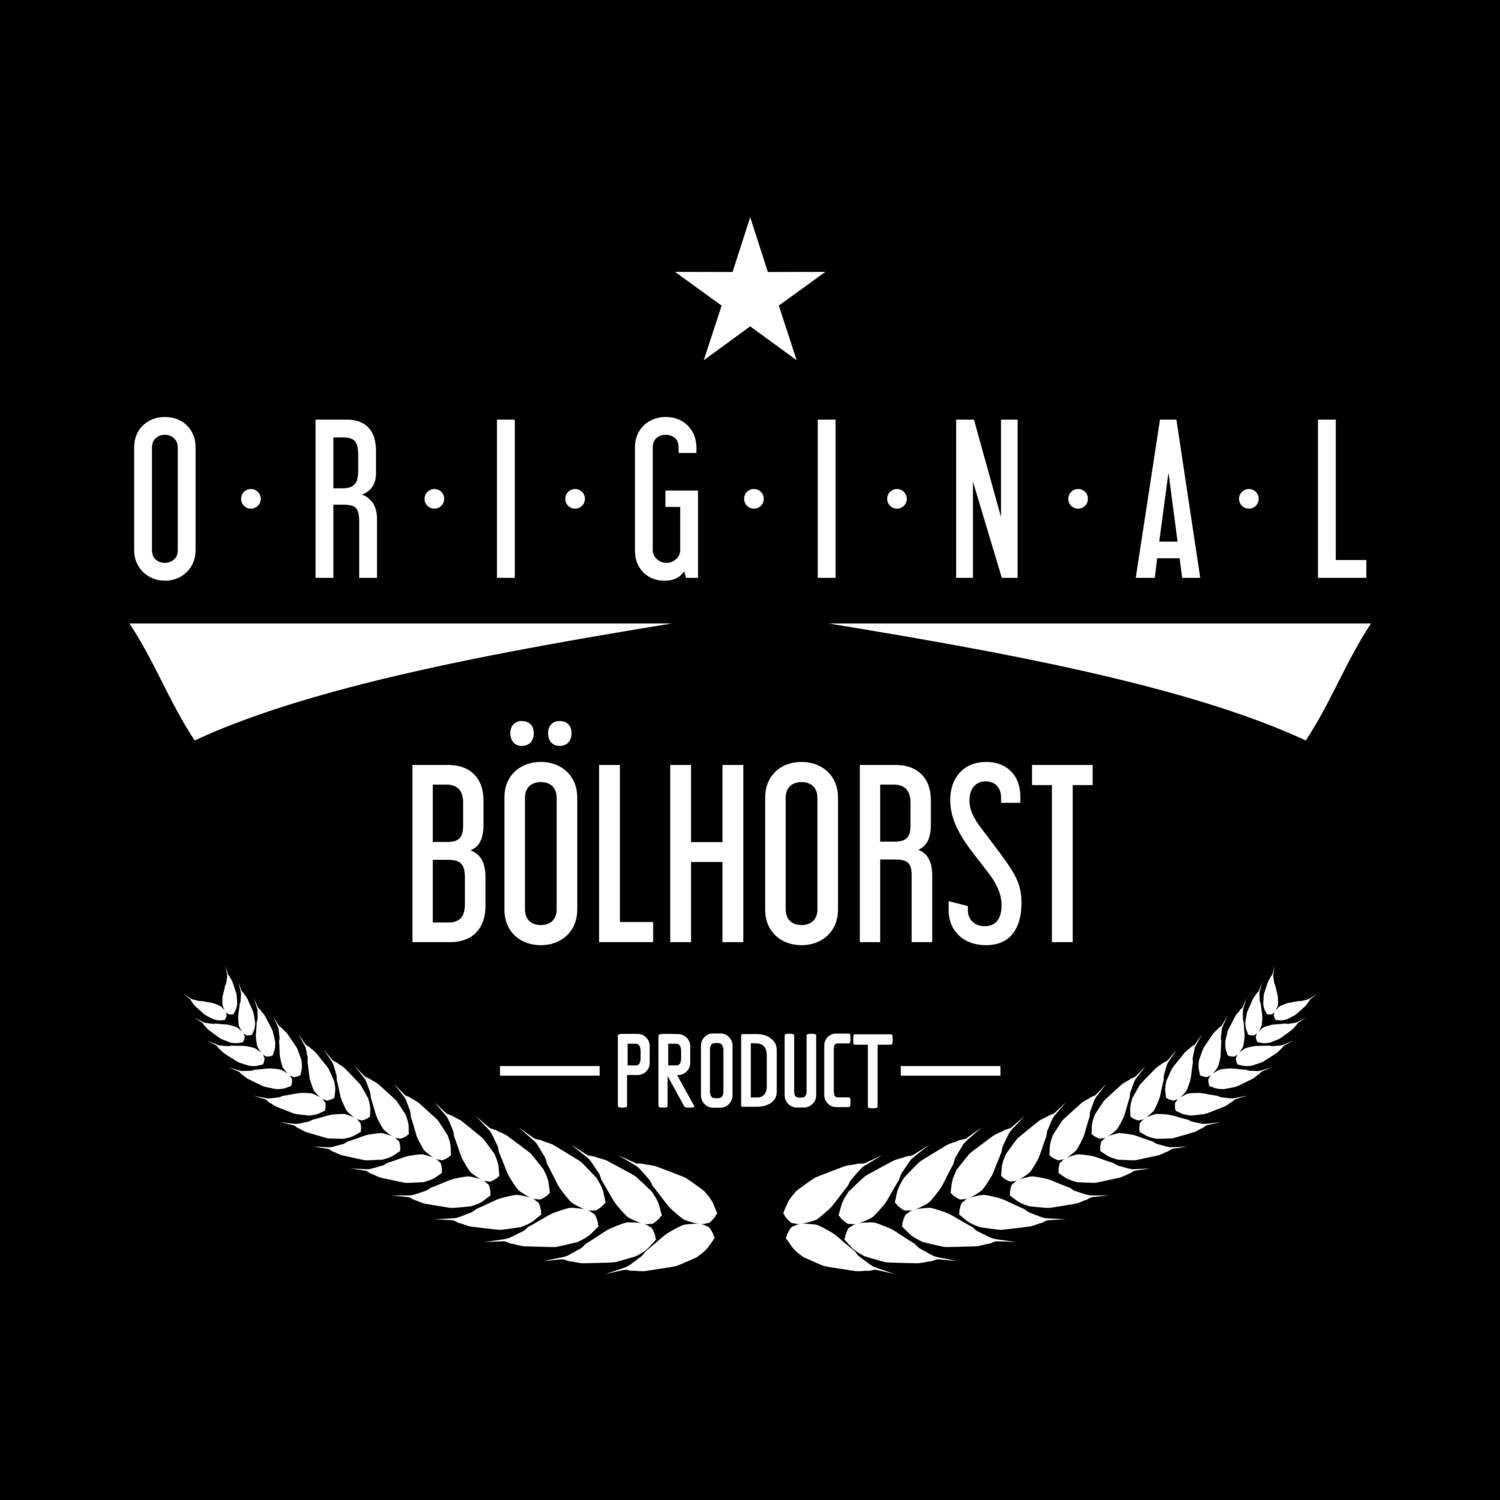 Bölhorst T-Shirt »Original Product«